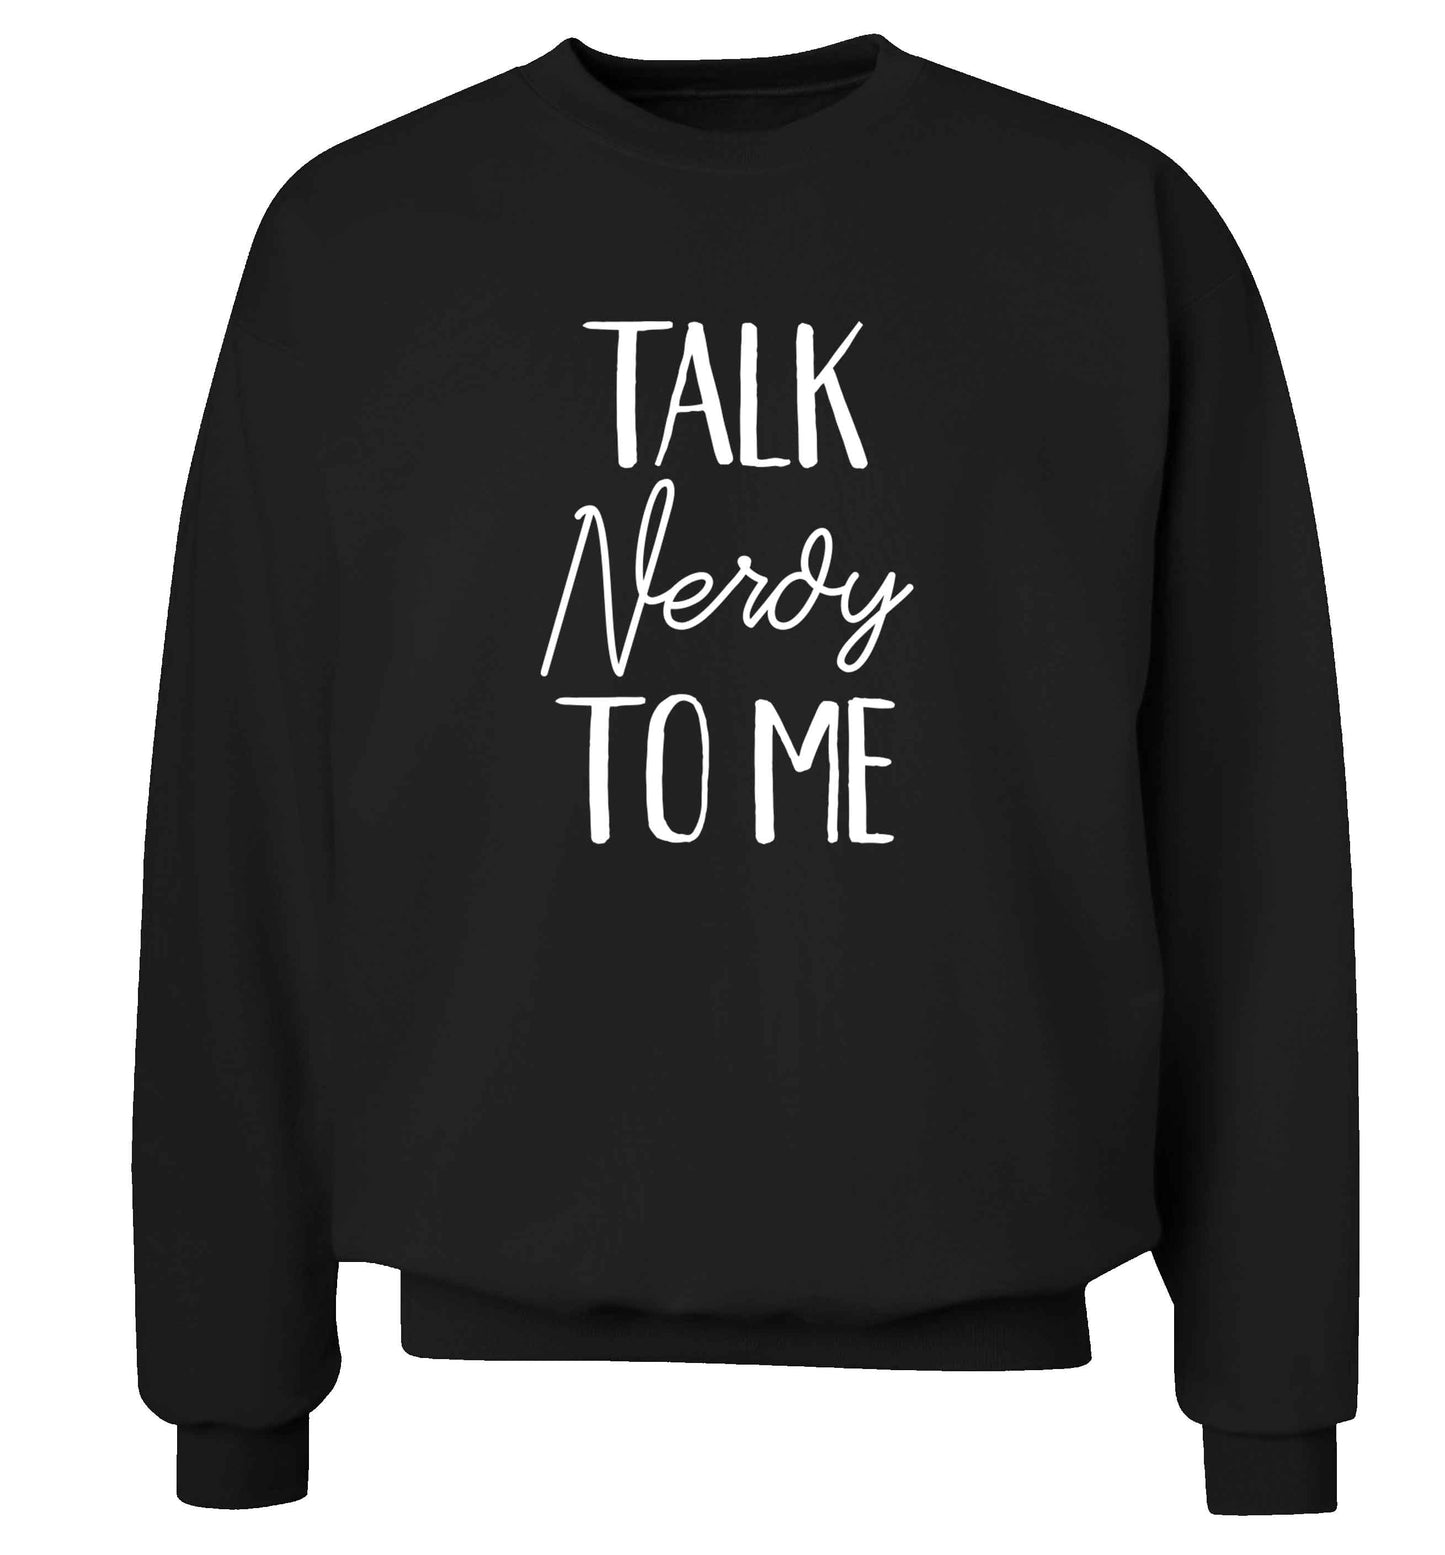 Talk nerdy to me adult's unisex black sweater 2XL